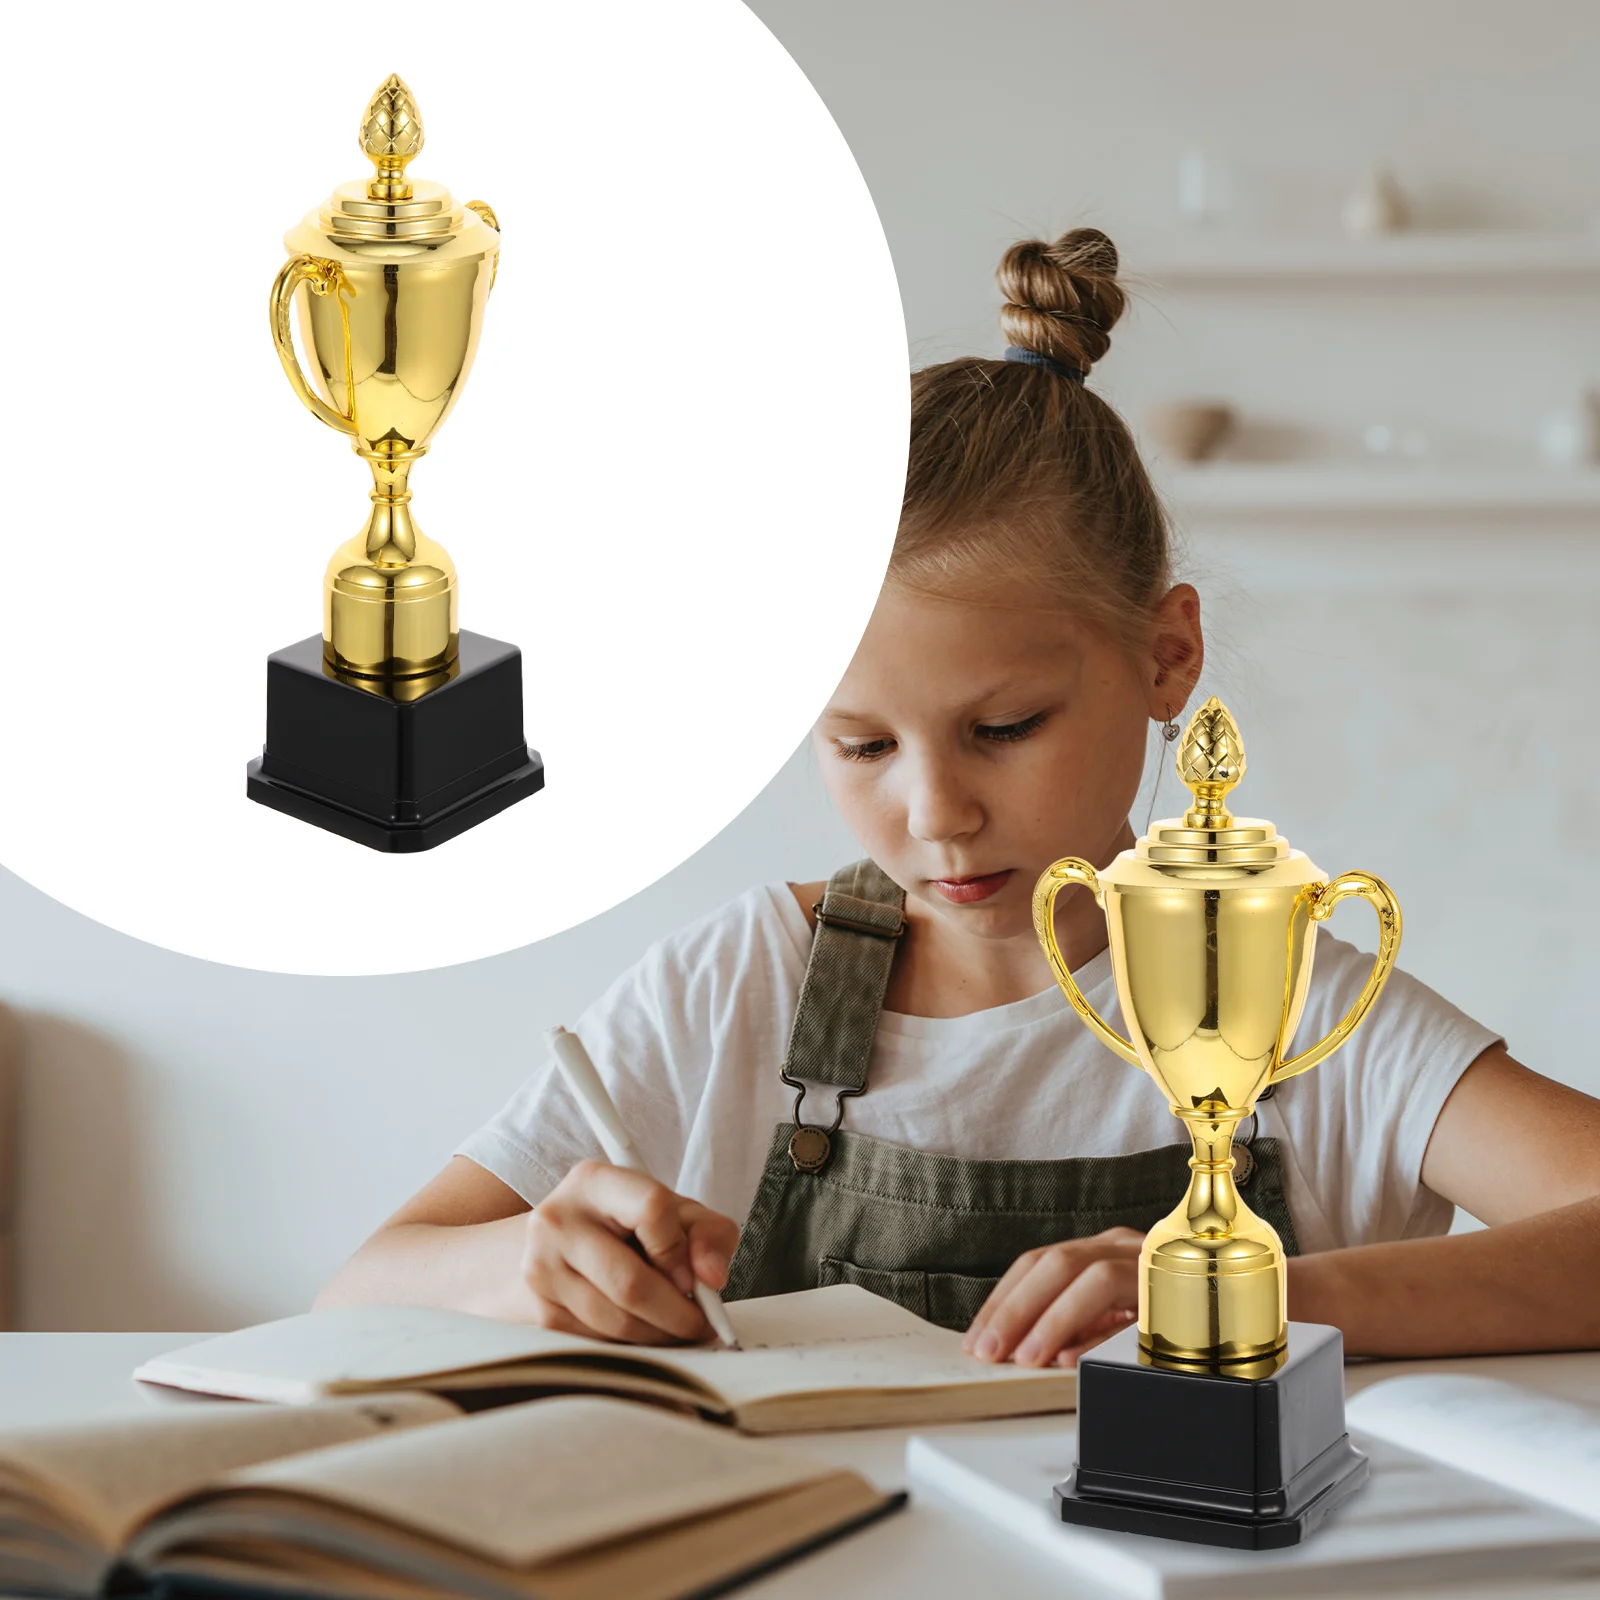 

Creative Trophy Kindergarten Children Company Trophy Decor Trophy Cup Multi-Function Award Trophy Prize Trophy Game Accessory